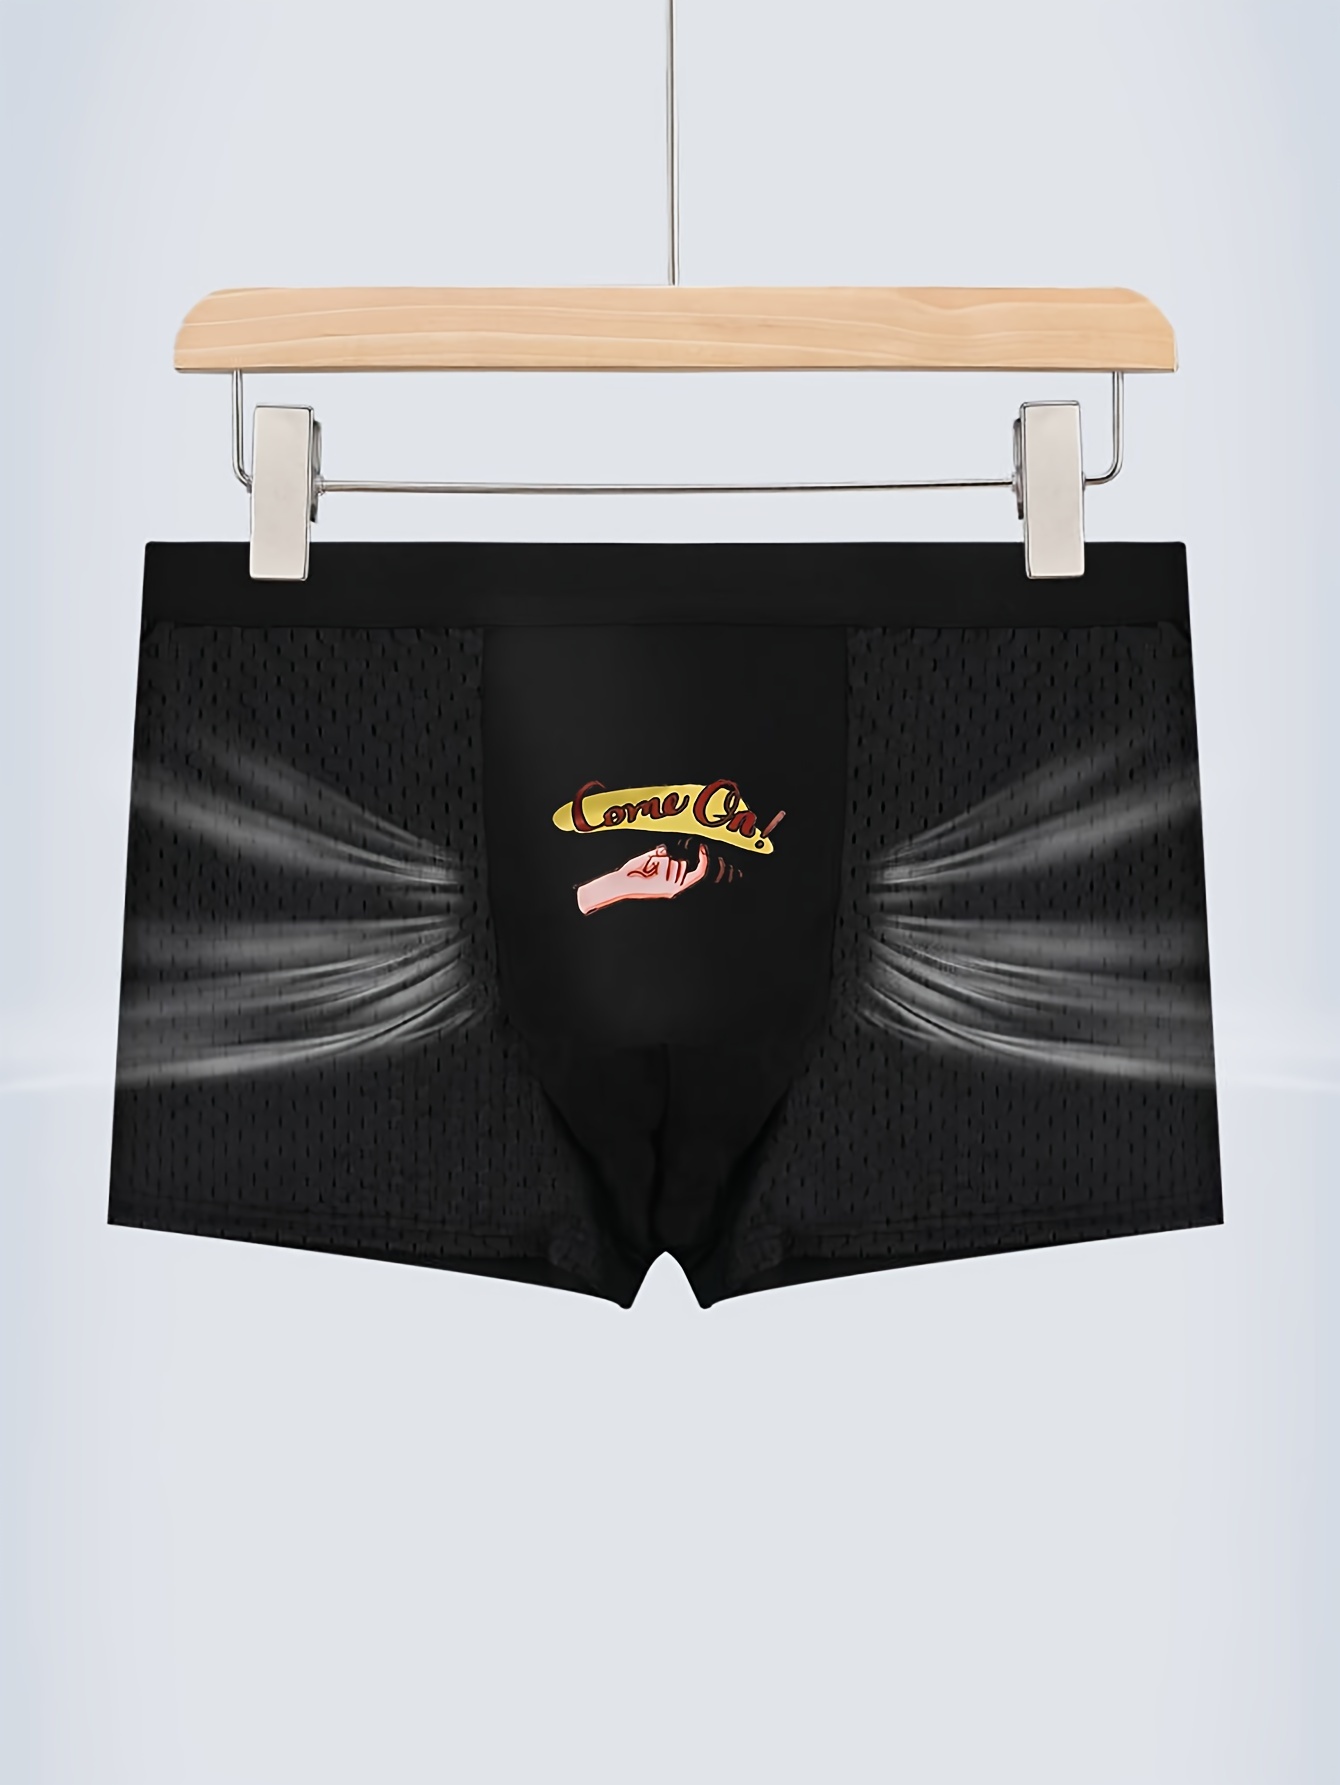 Briefs For Men  Buy Funky & Sexy Printed Underwear For Men – Sexy